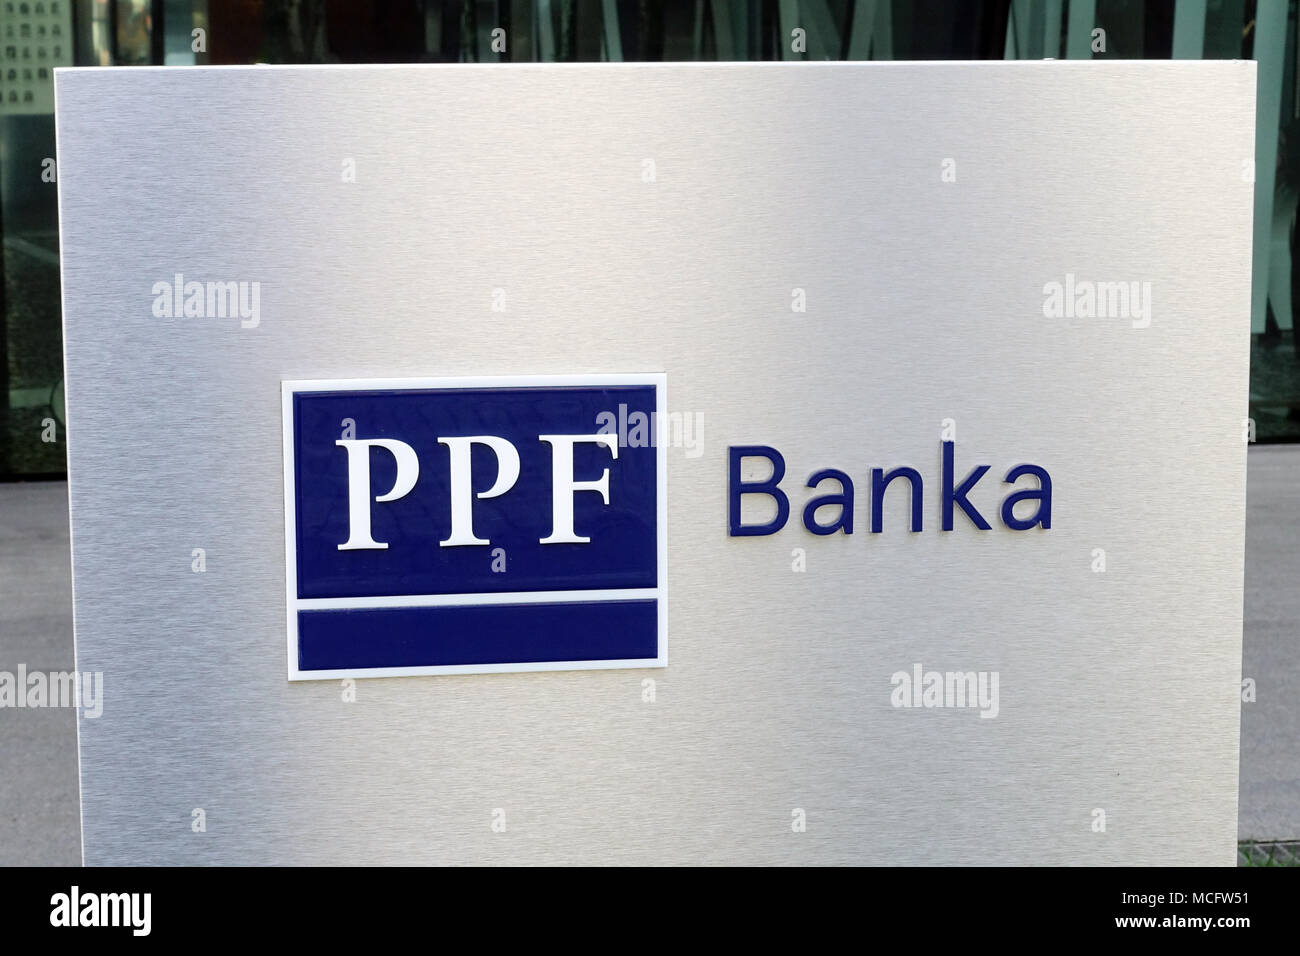 PPF Banka logo,PPF group member, Czech Republic Stock Photo